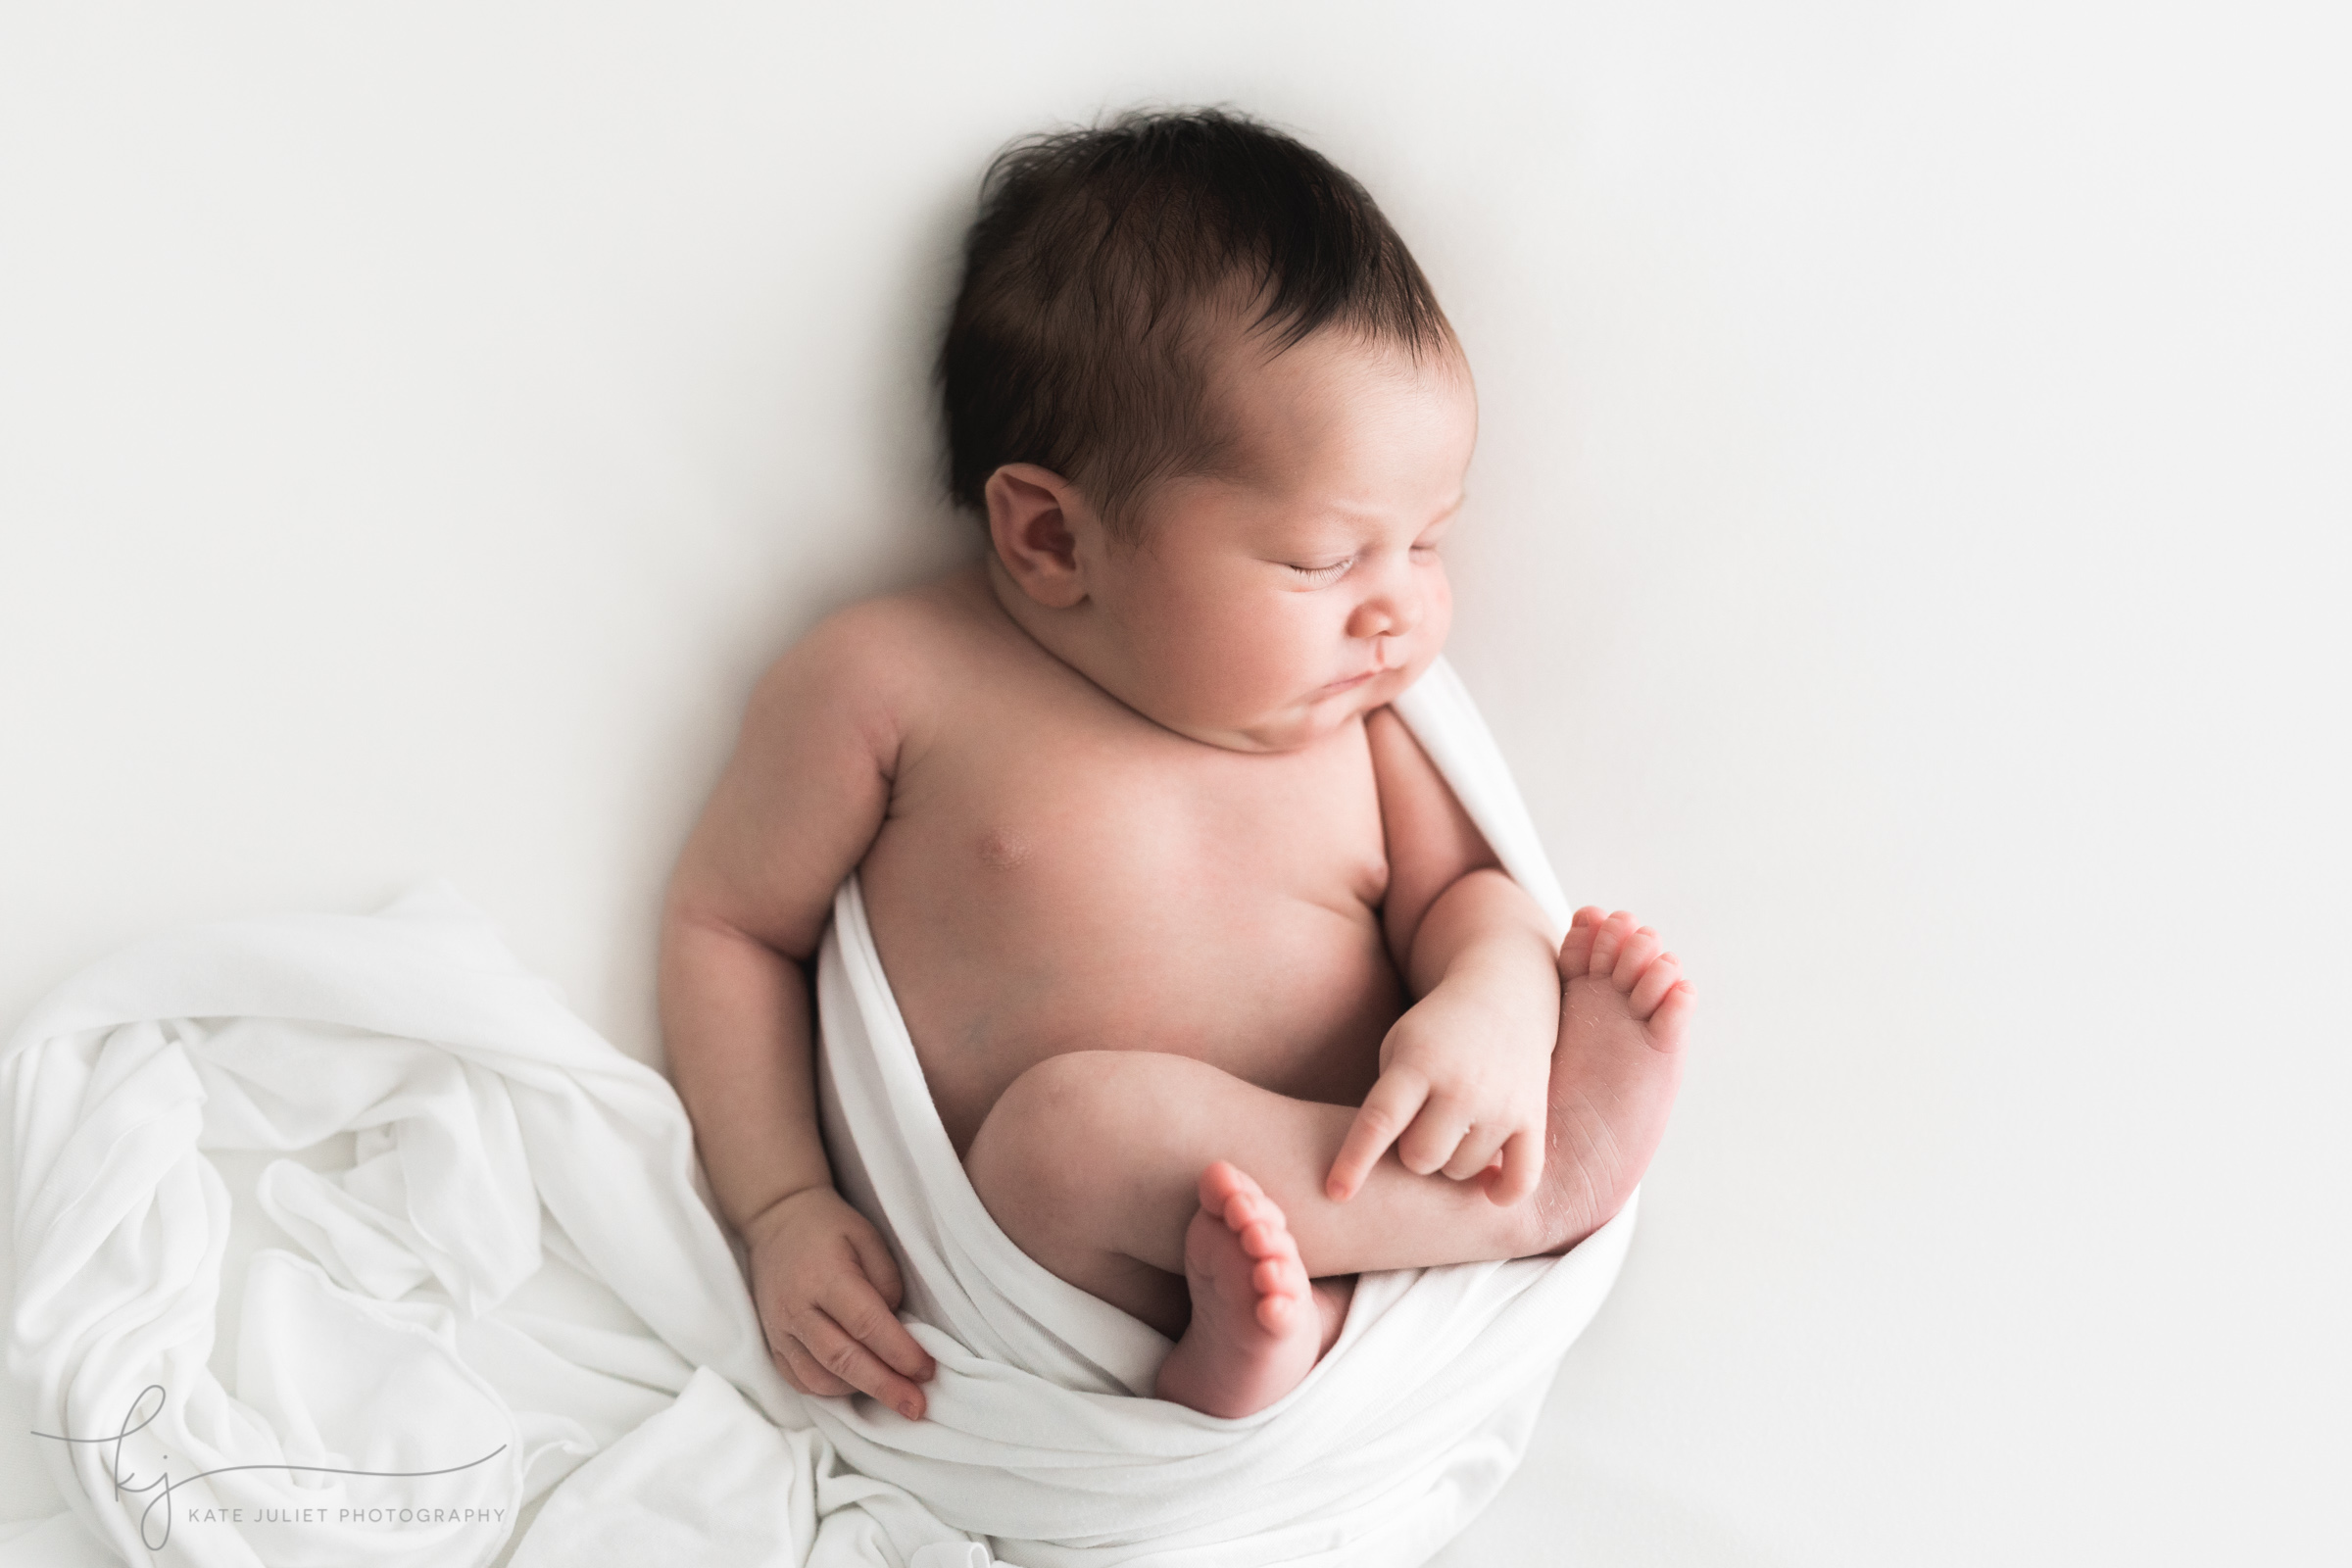 Fairfax VA Newborn Baby Photographer | Kate Juliet Photography